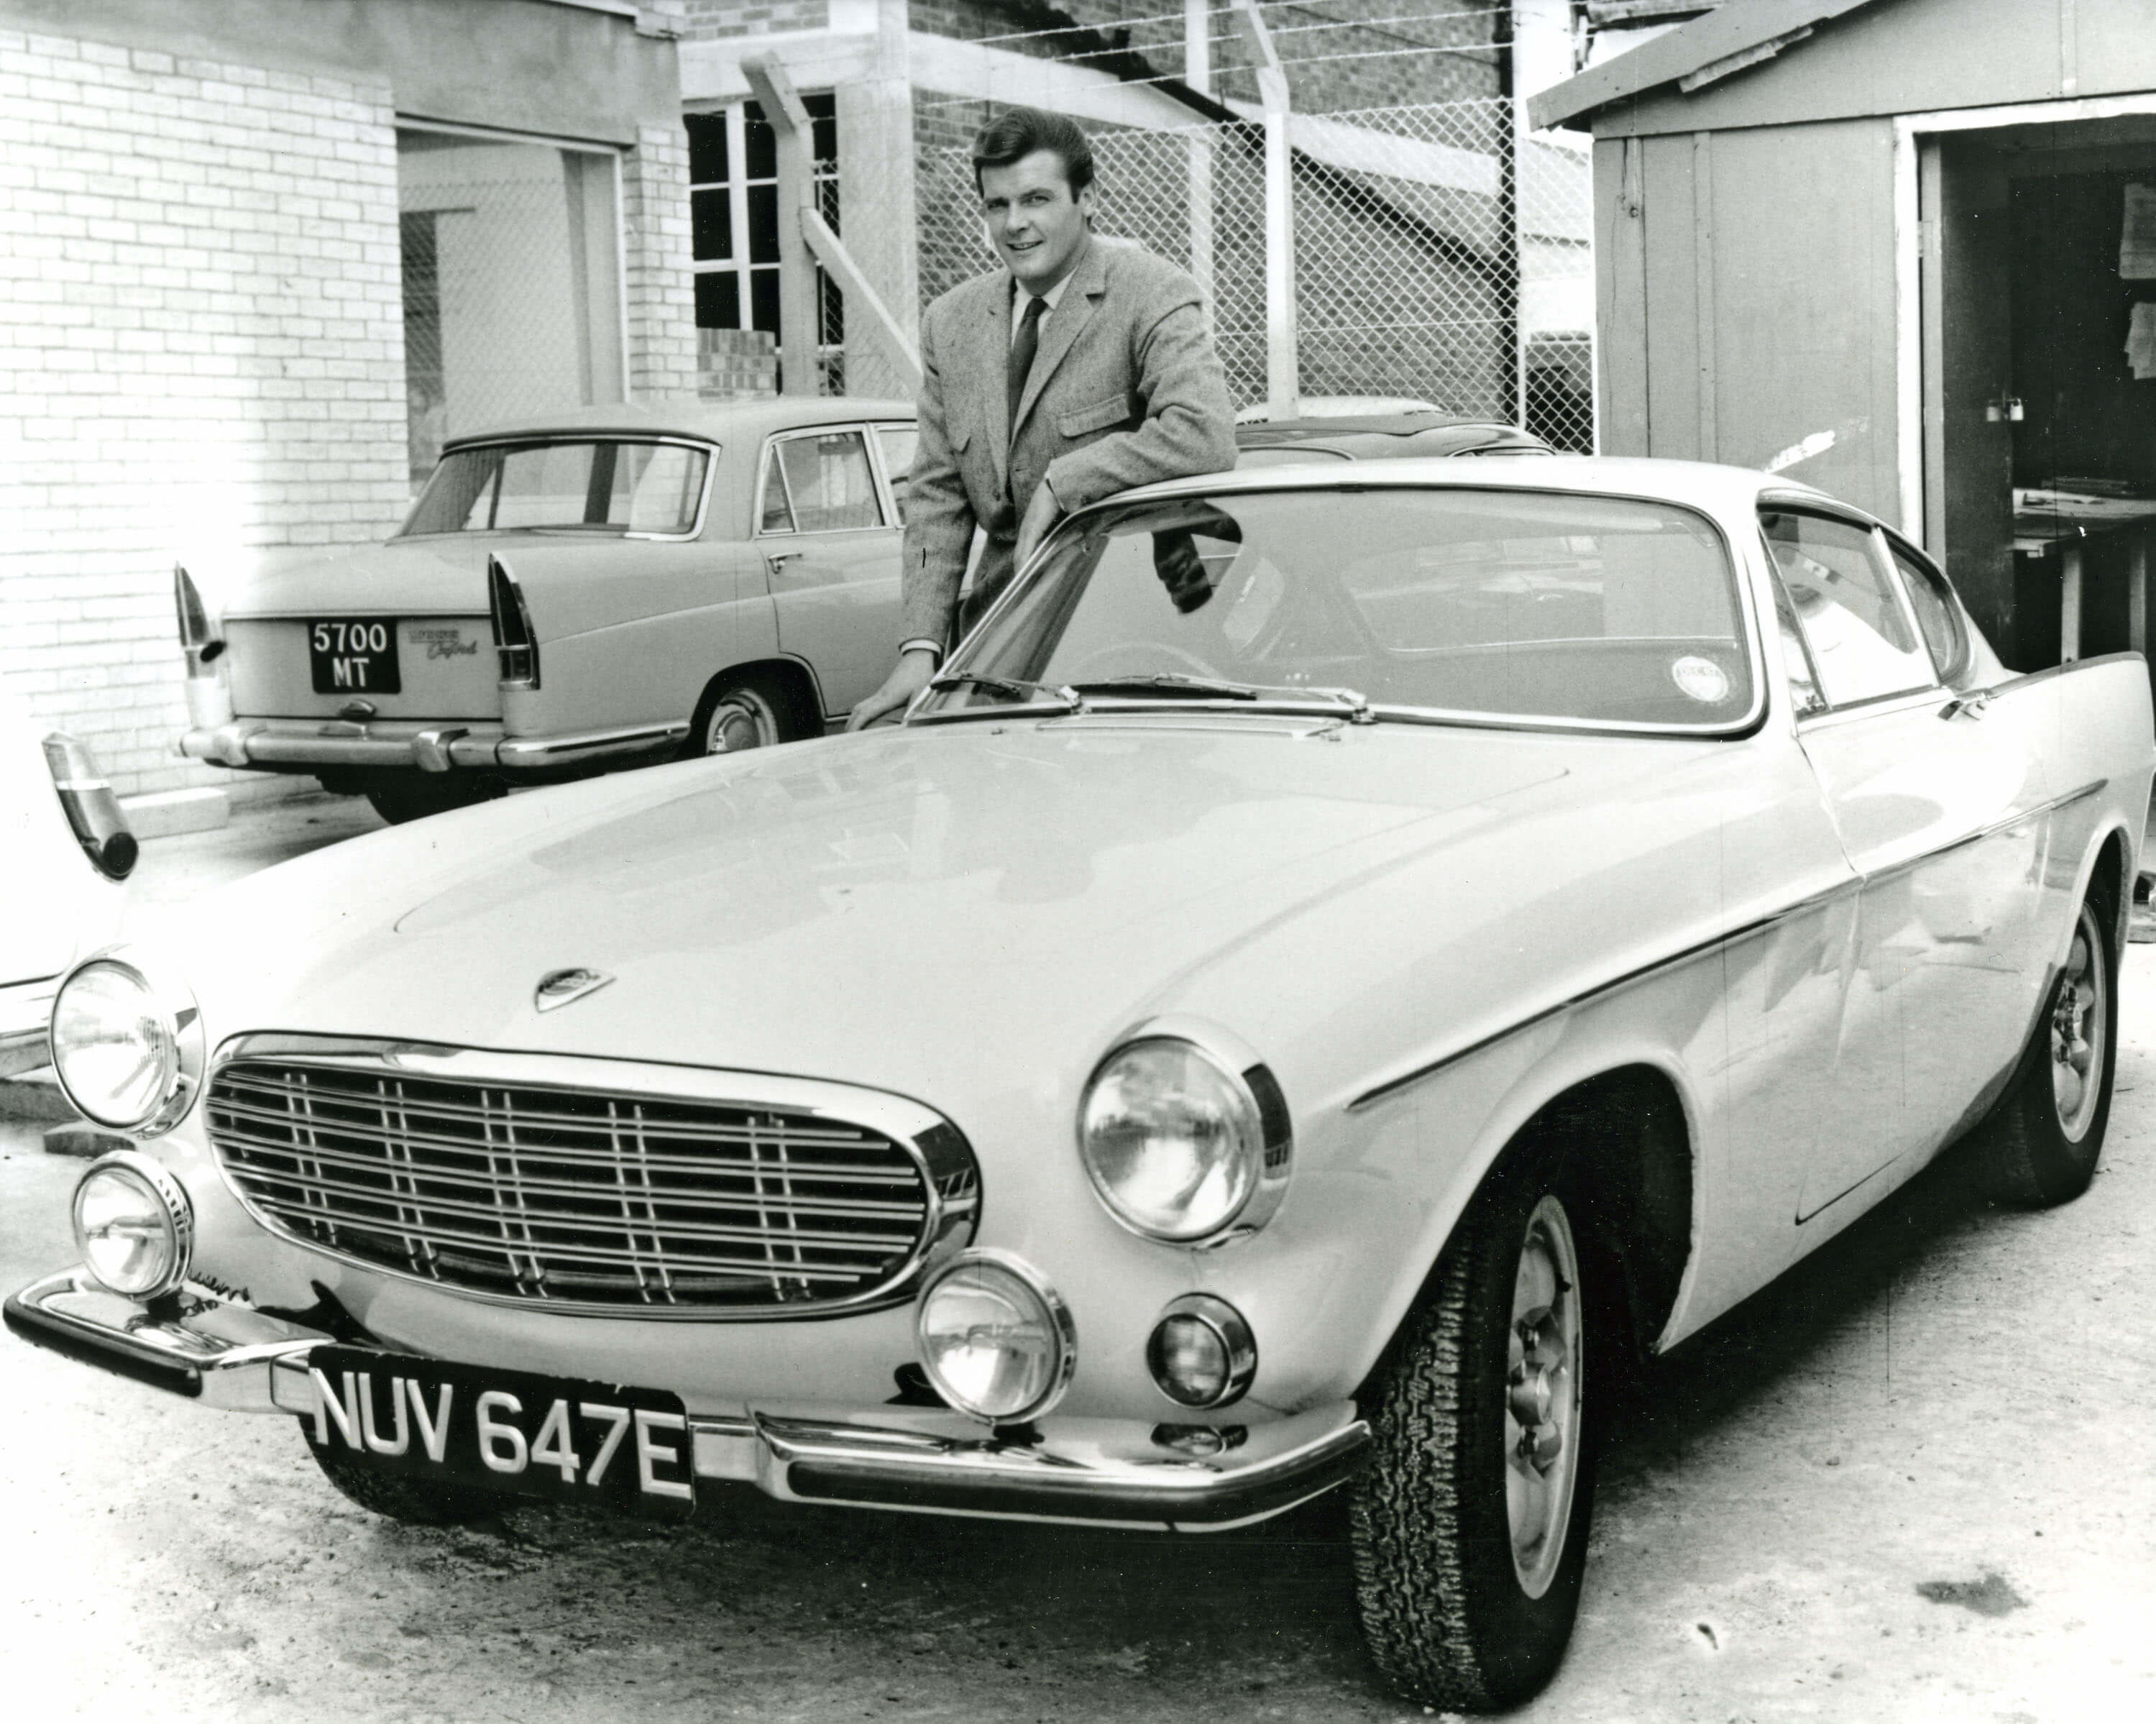 Roger at Elstree Studios with the Volvo P1800 (also Simon Templar's car). Pictorial Press Ltd / Alamy Stock Photo.